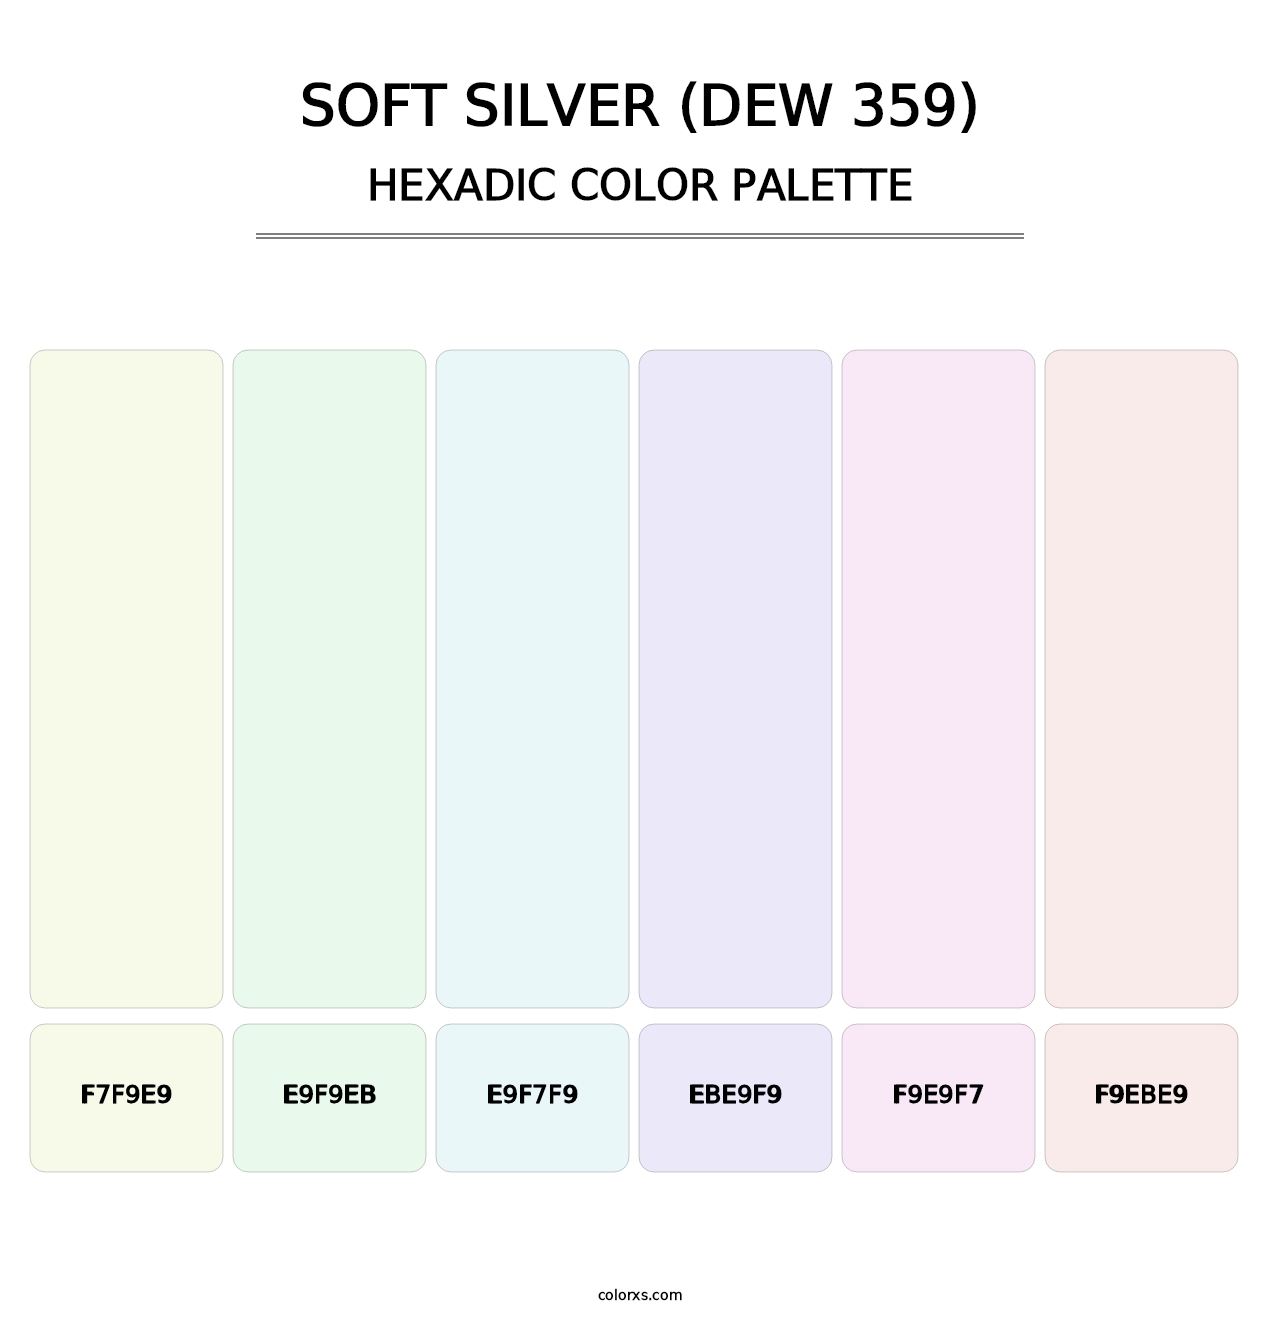 Soft Silver (DEW 359) - Hexadic Color Palette